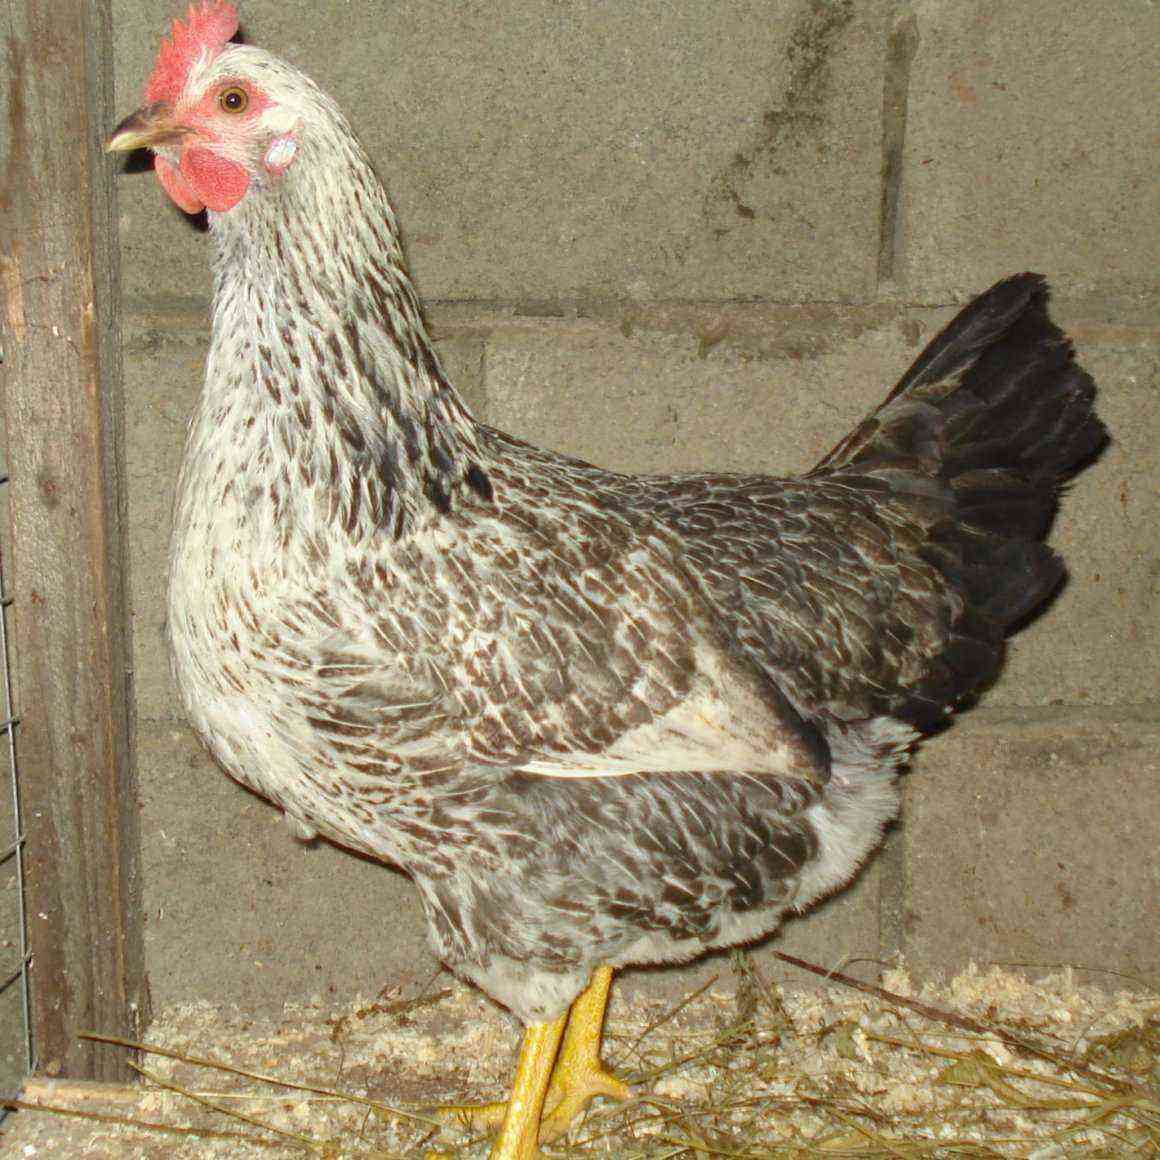 The breed of chickens is Kotlyarevskaya